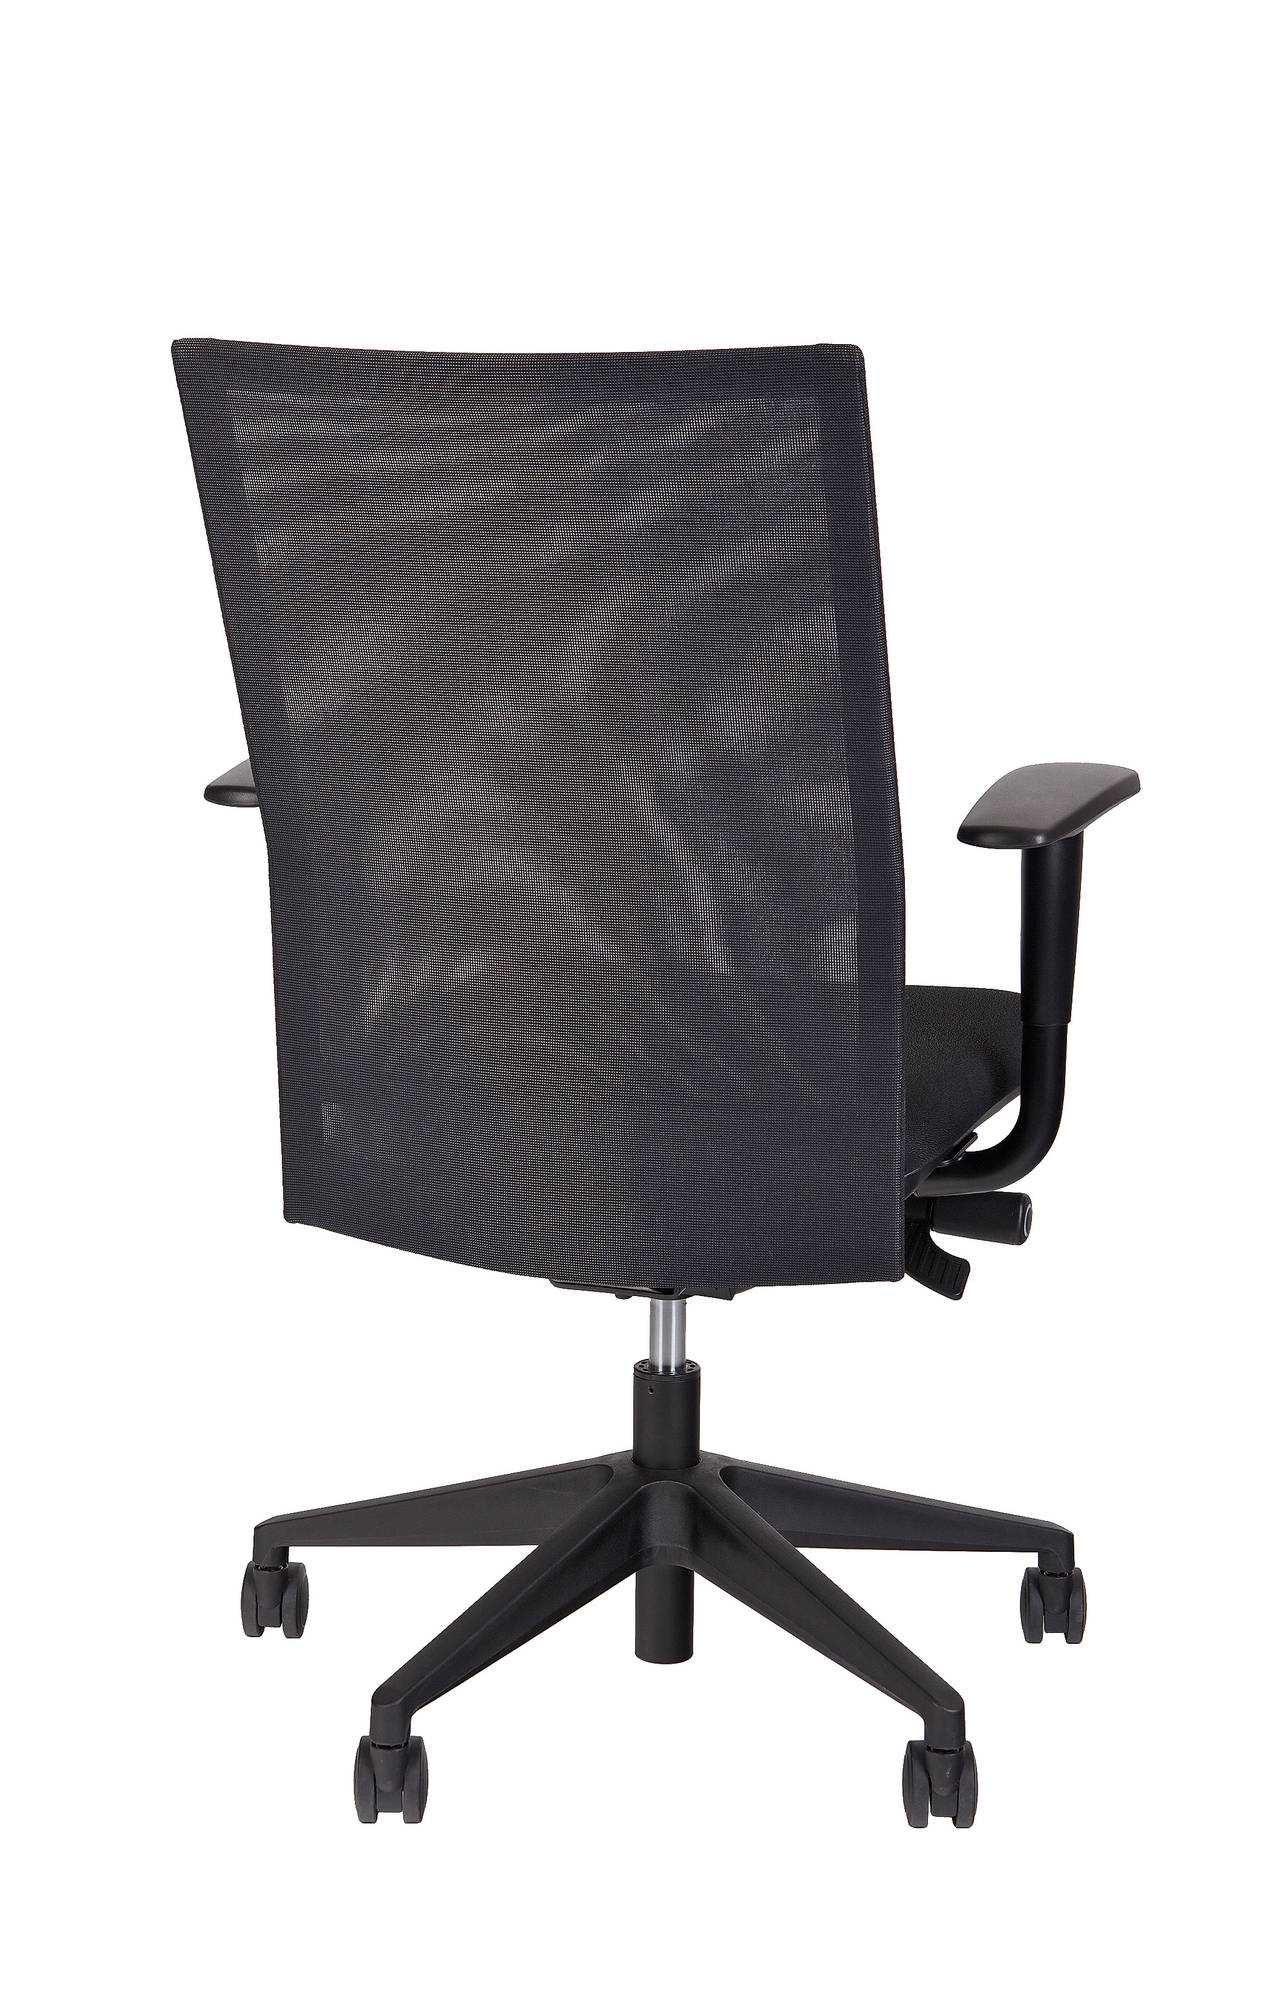 Black ergonomic office chair Cordoba mesh